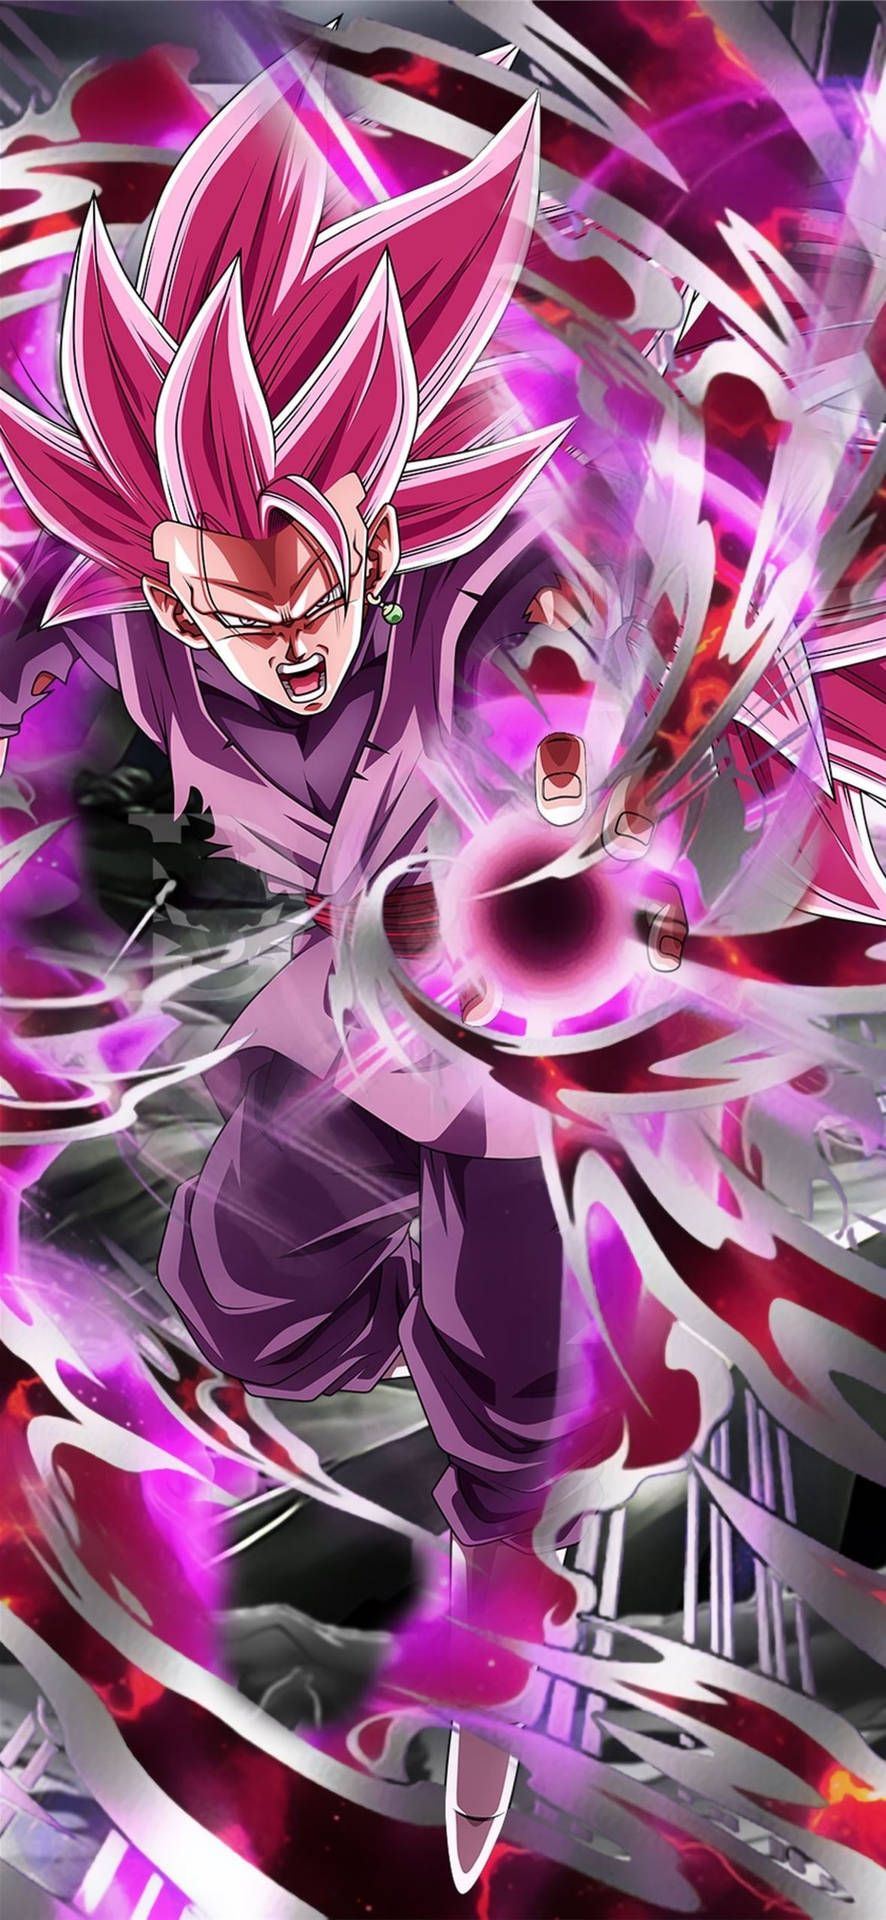 Black Goku Rose 4k With Energy Ball Background